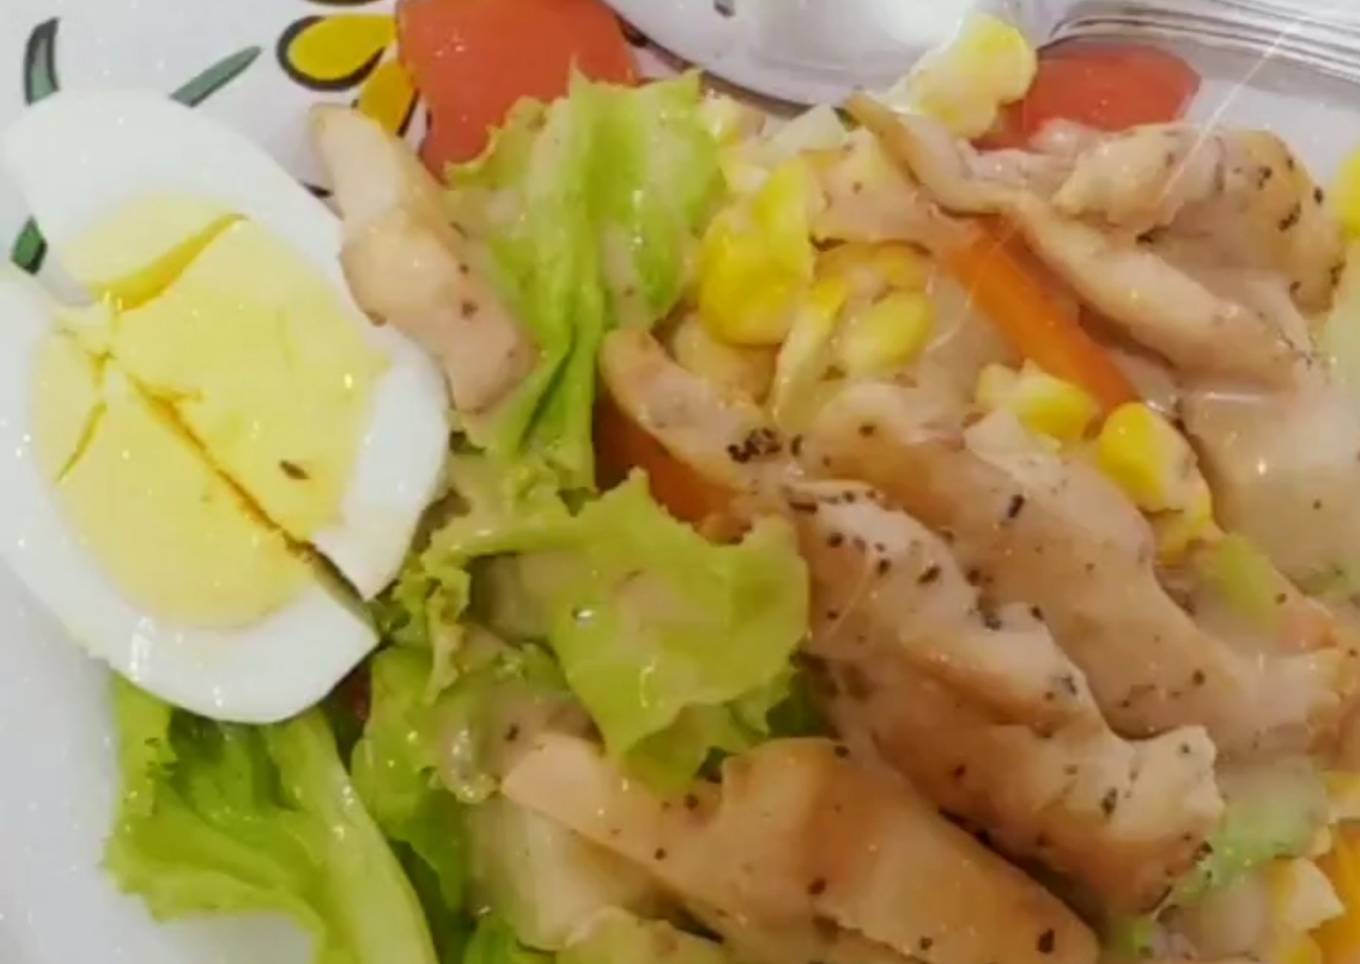 Blackpapper chicken salad with egg